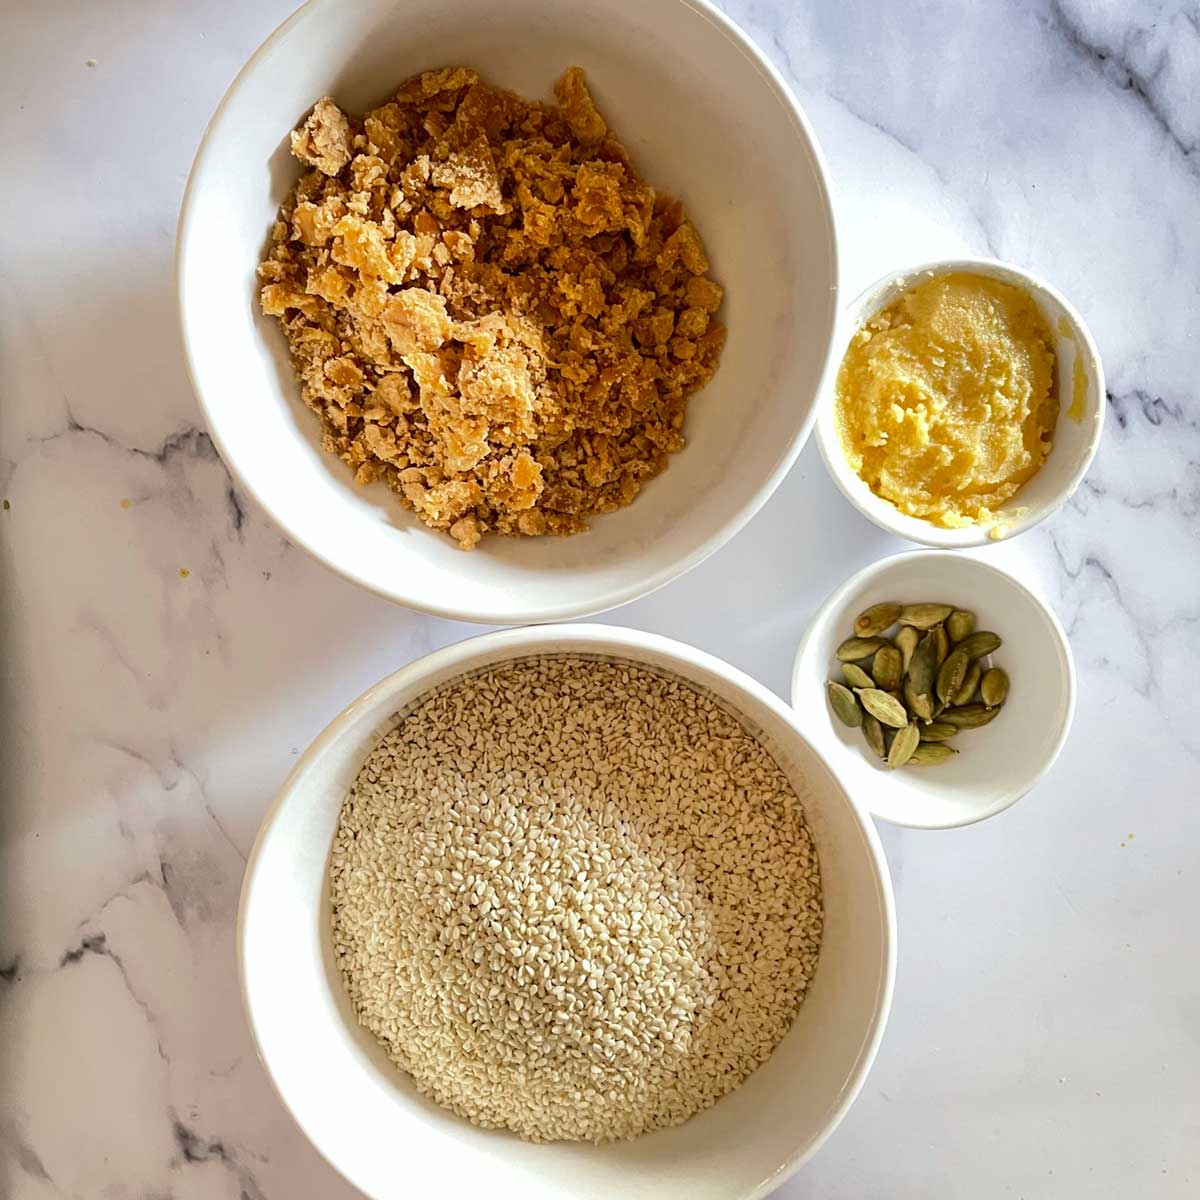 Sesame laddu ingredients in bowls.